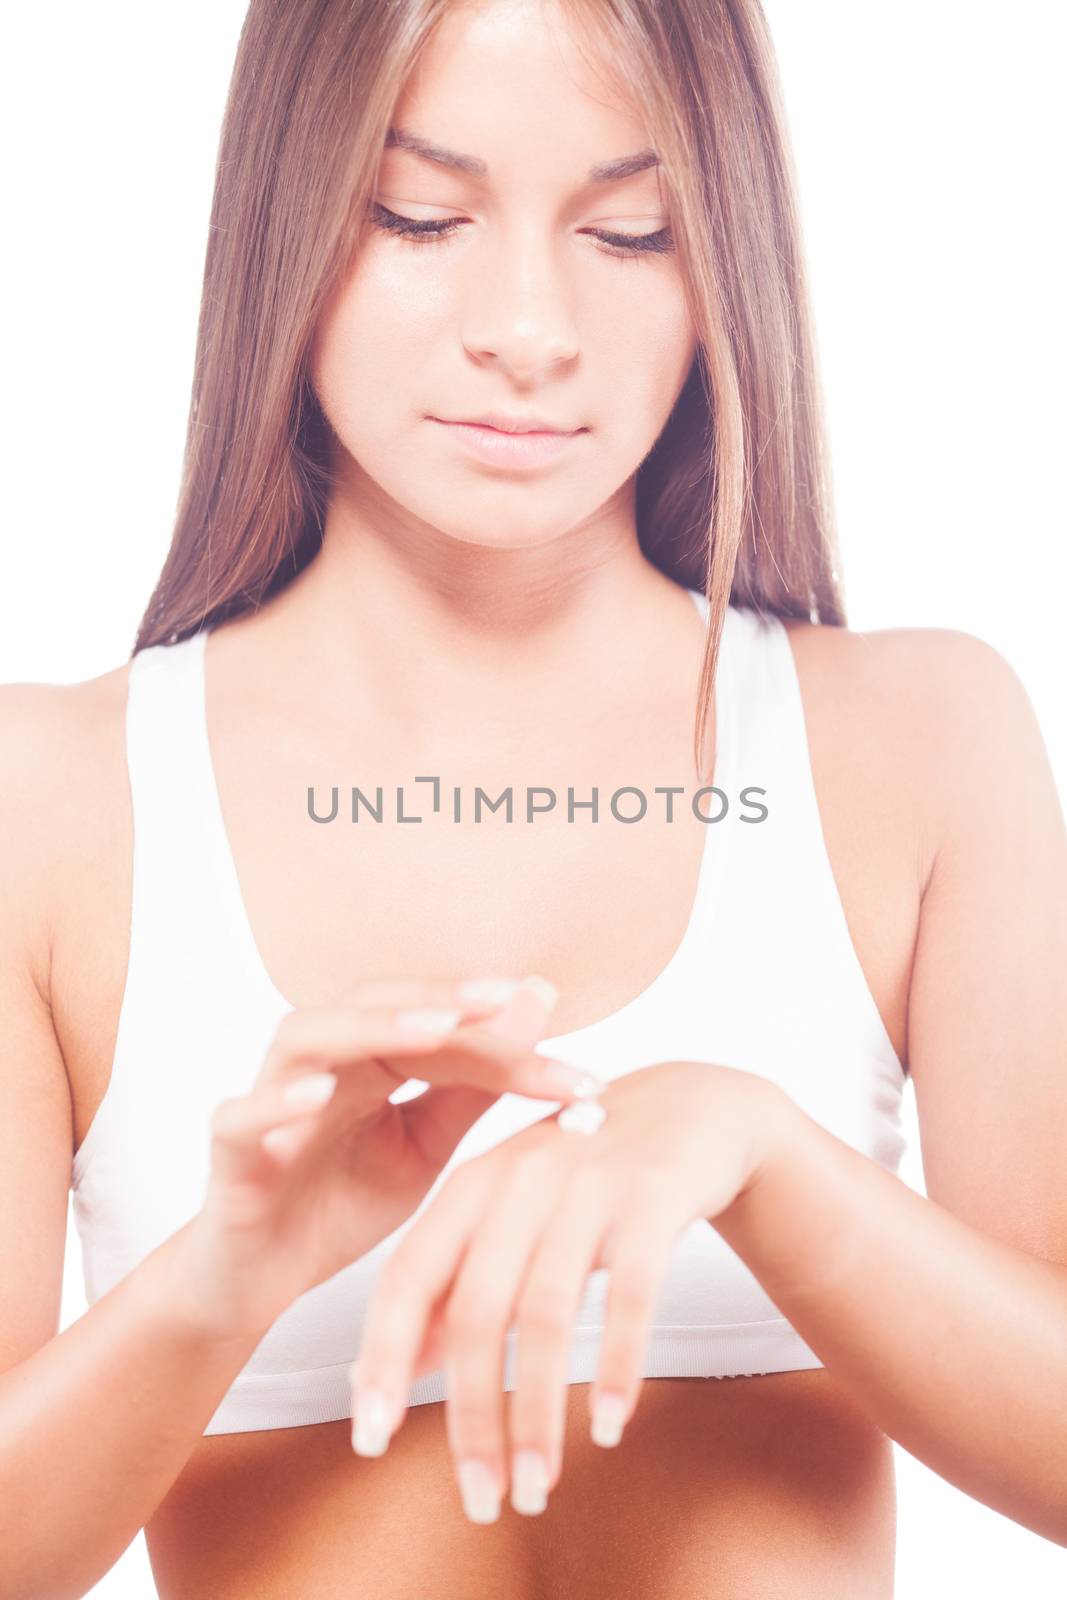 Beautiful young woman applying hand lotion.